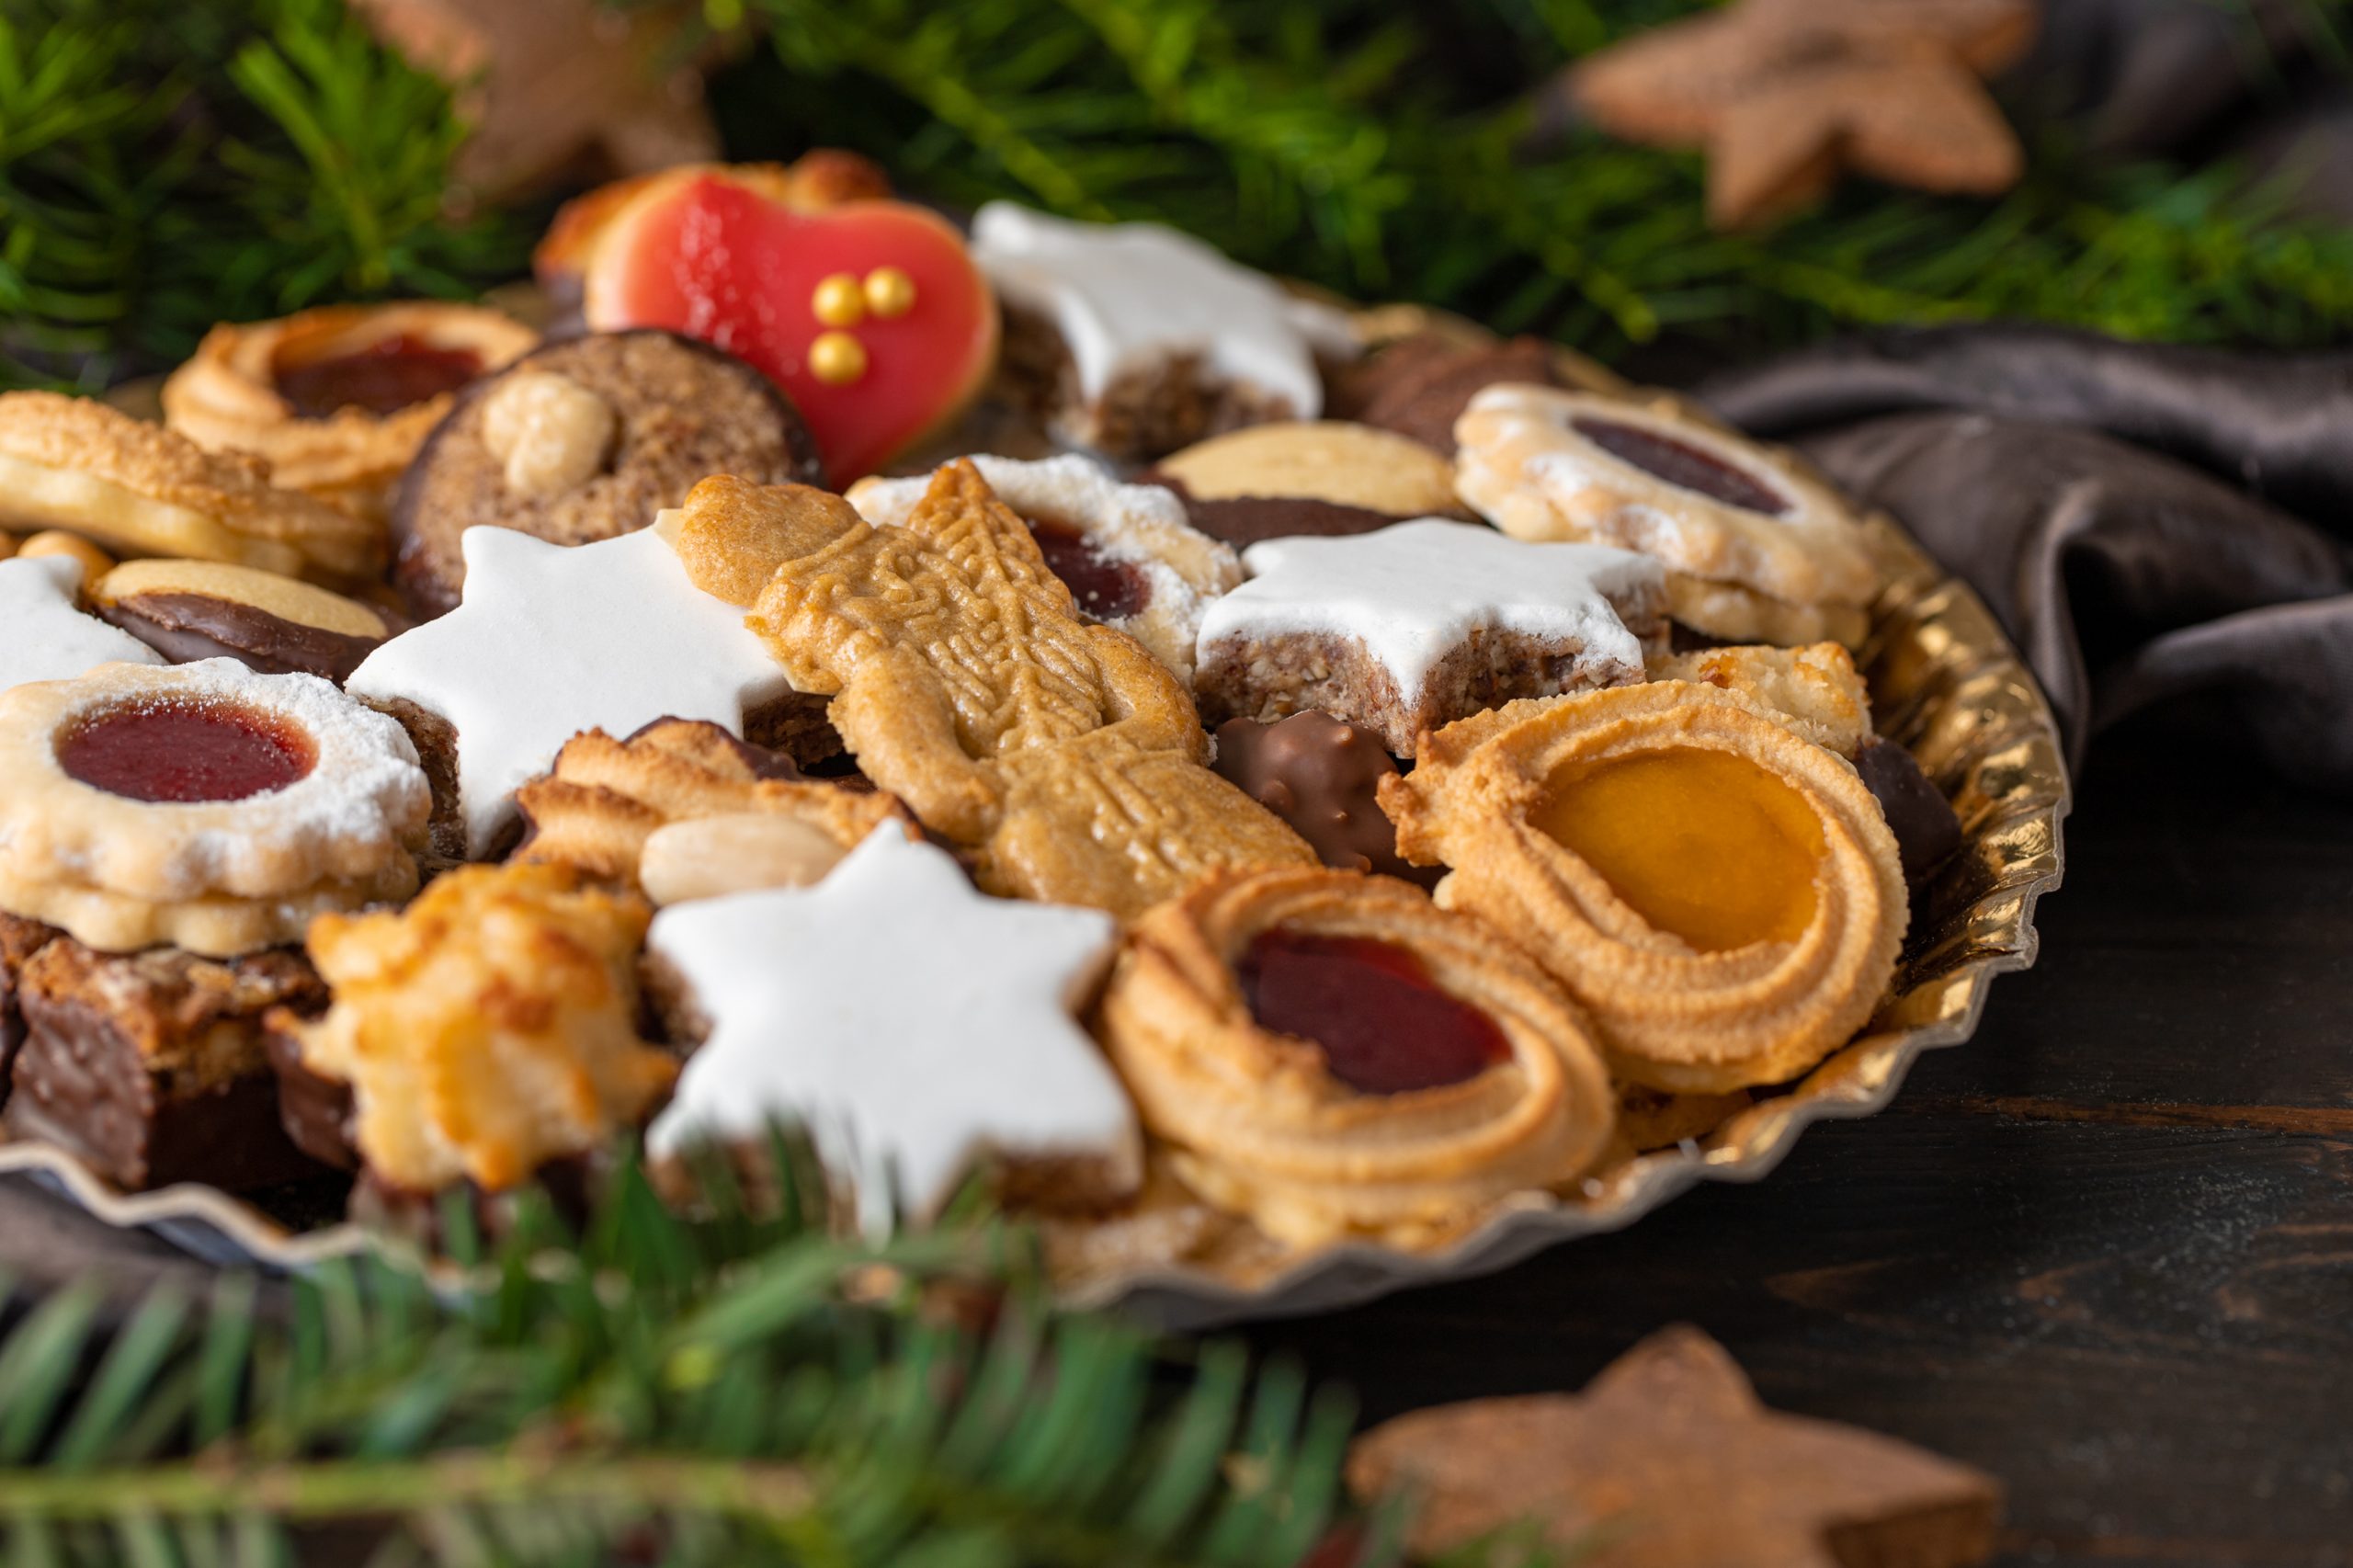 Austrian Christmas delicacies